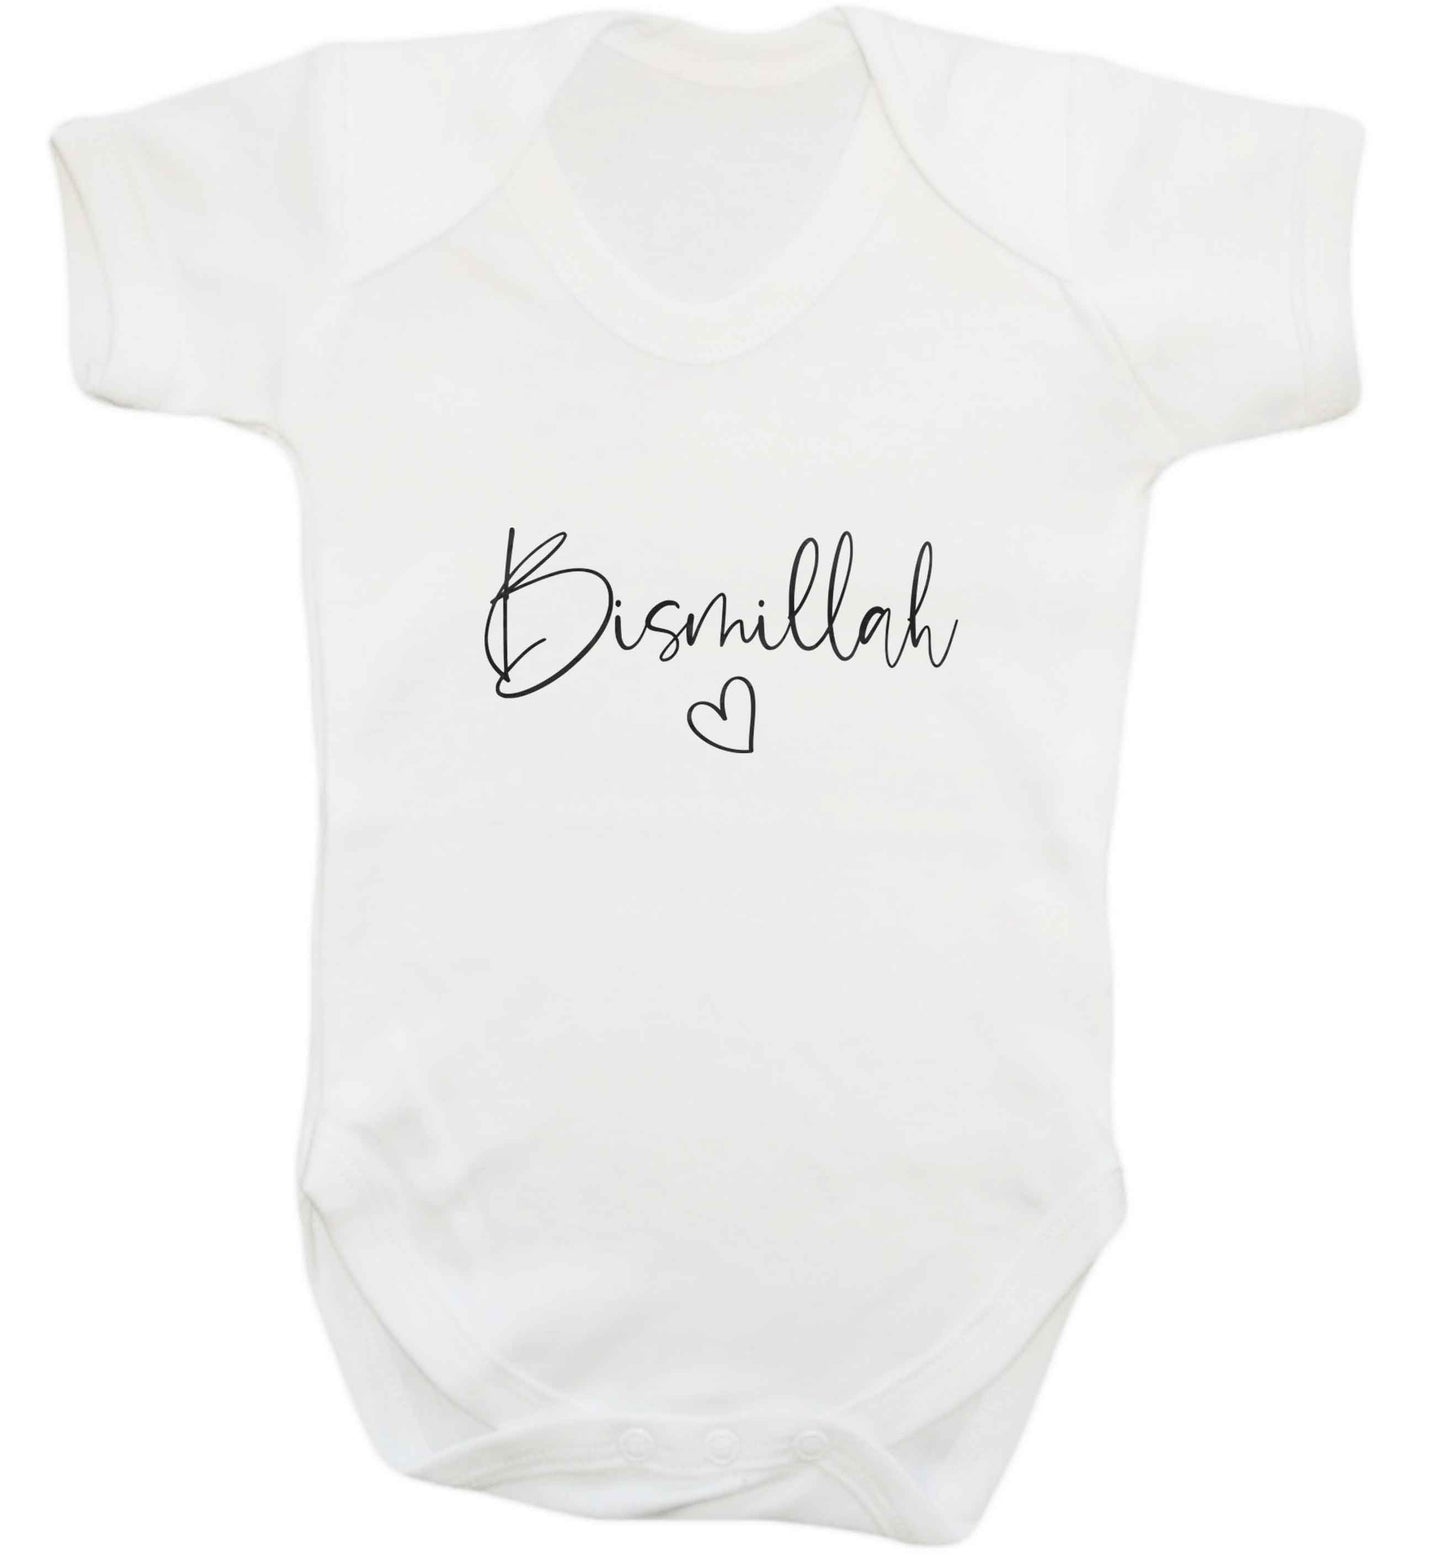 Bismillah baby vest white 18-24 months